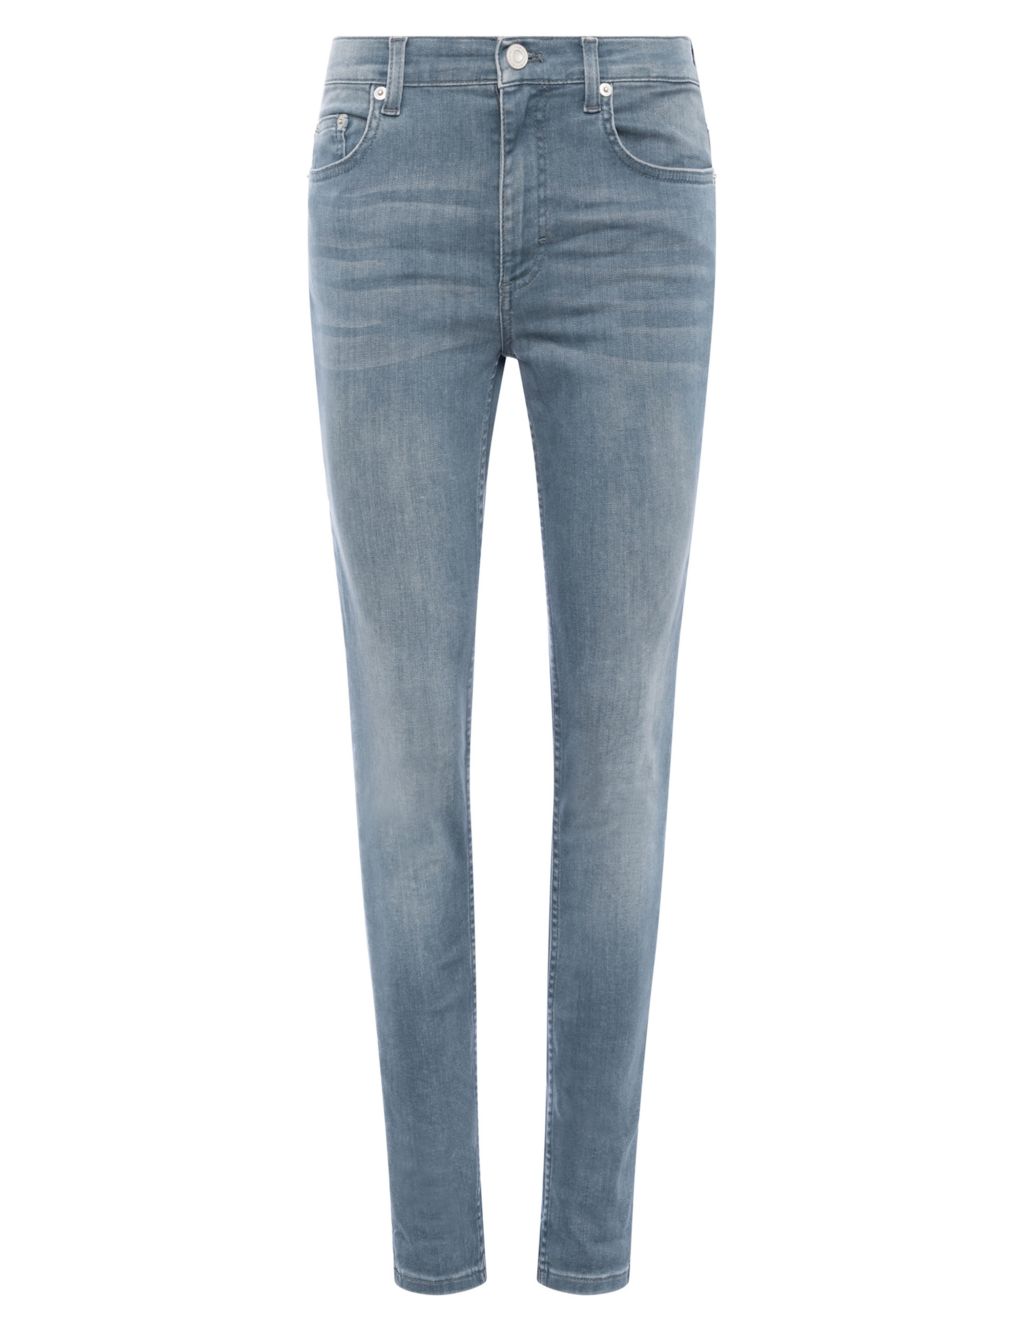 Skinny Ankle Grazer Jeans image 2